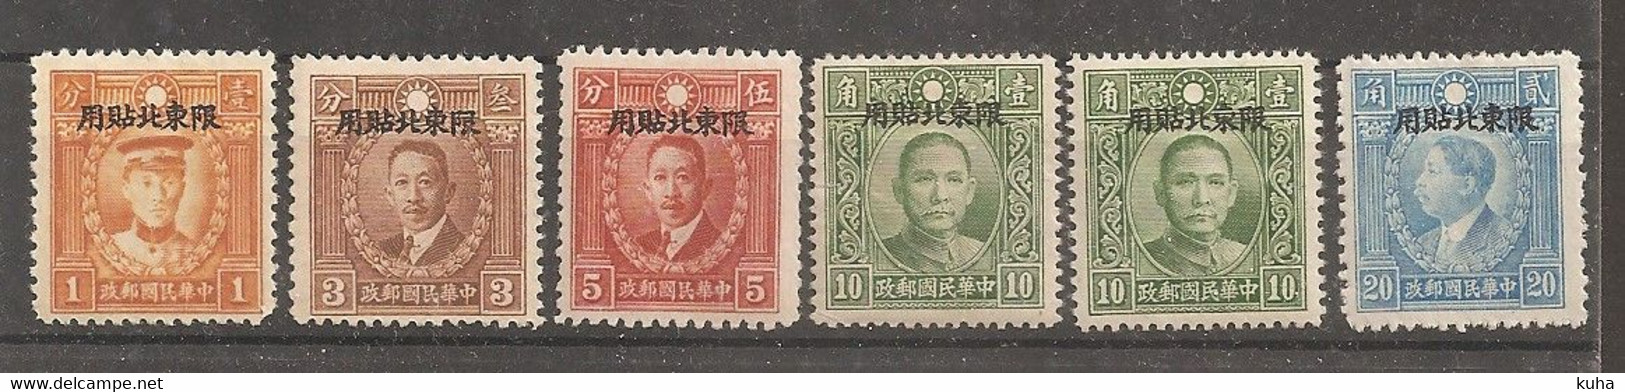 China Chine 1946 North China MNH & MH - Northern China 1949-50